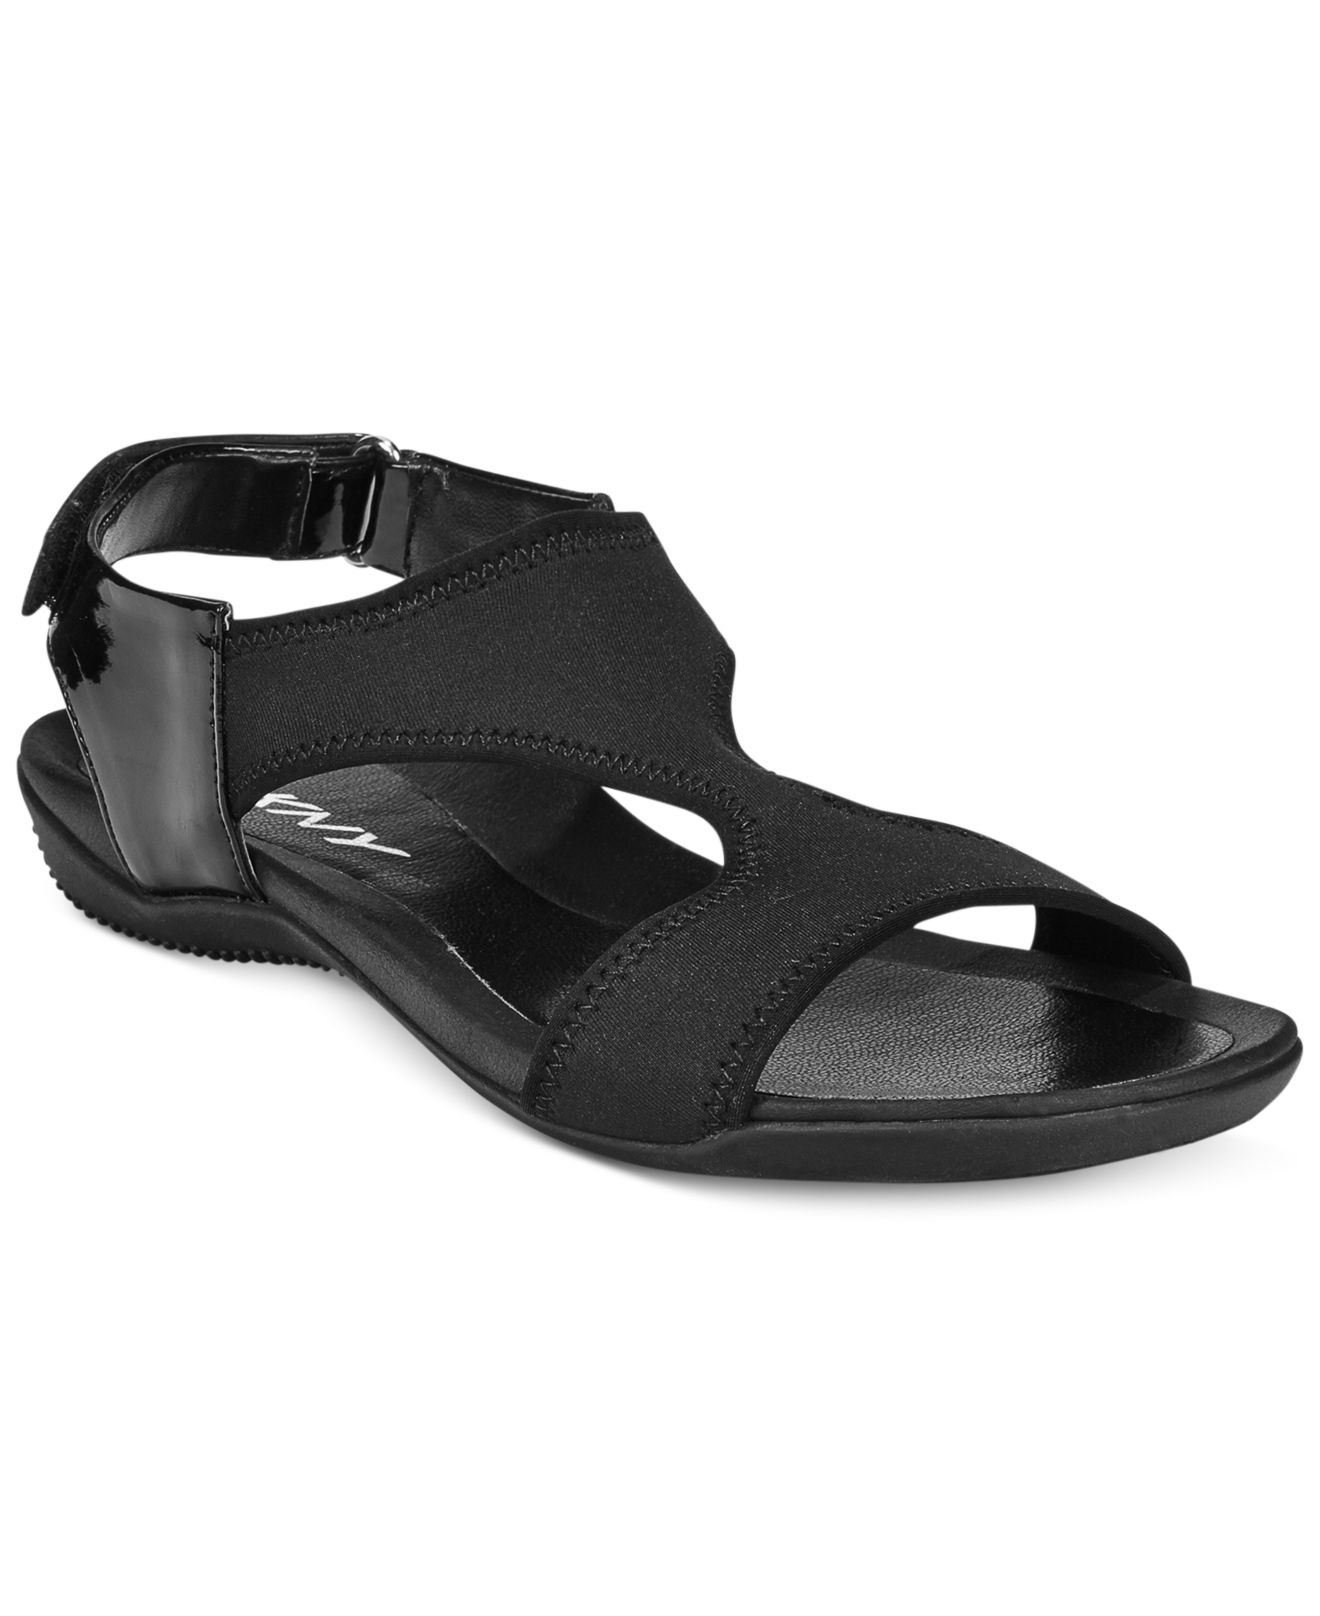 Lyst - DKNY Shoreline Sandals in Black